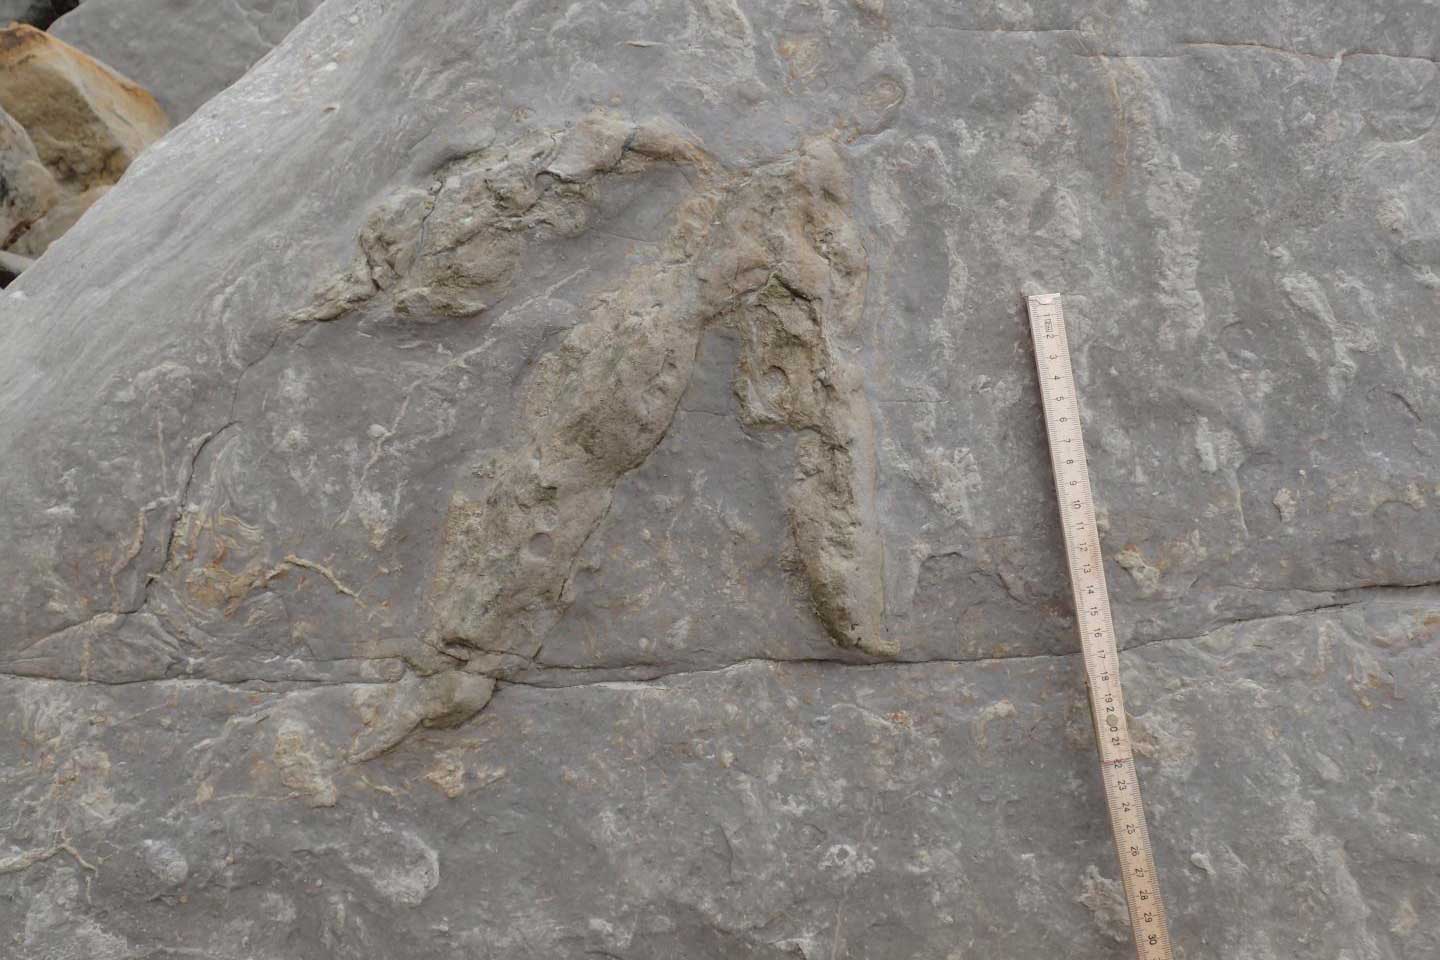 A small theropod (carnivore) footprint.  CREDIT Neil Davies